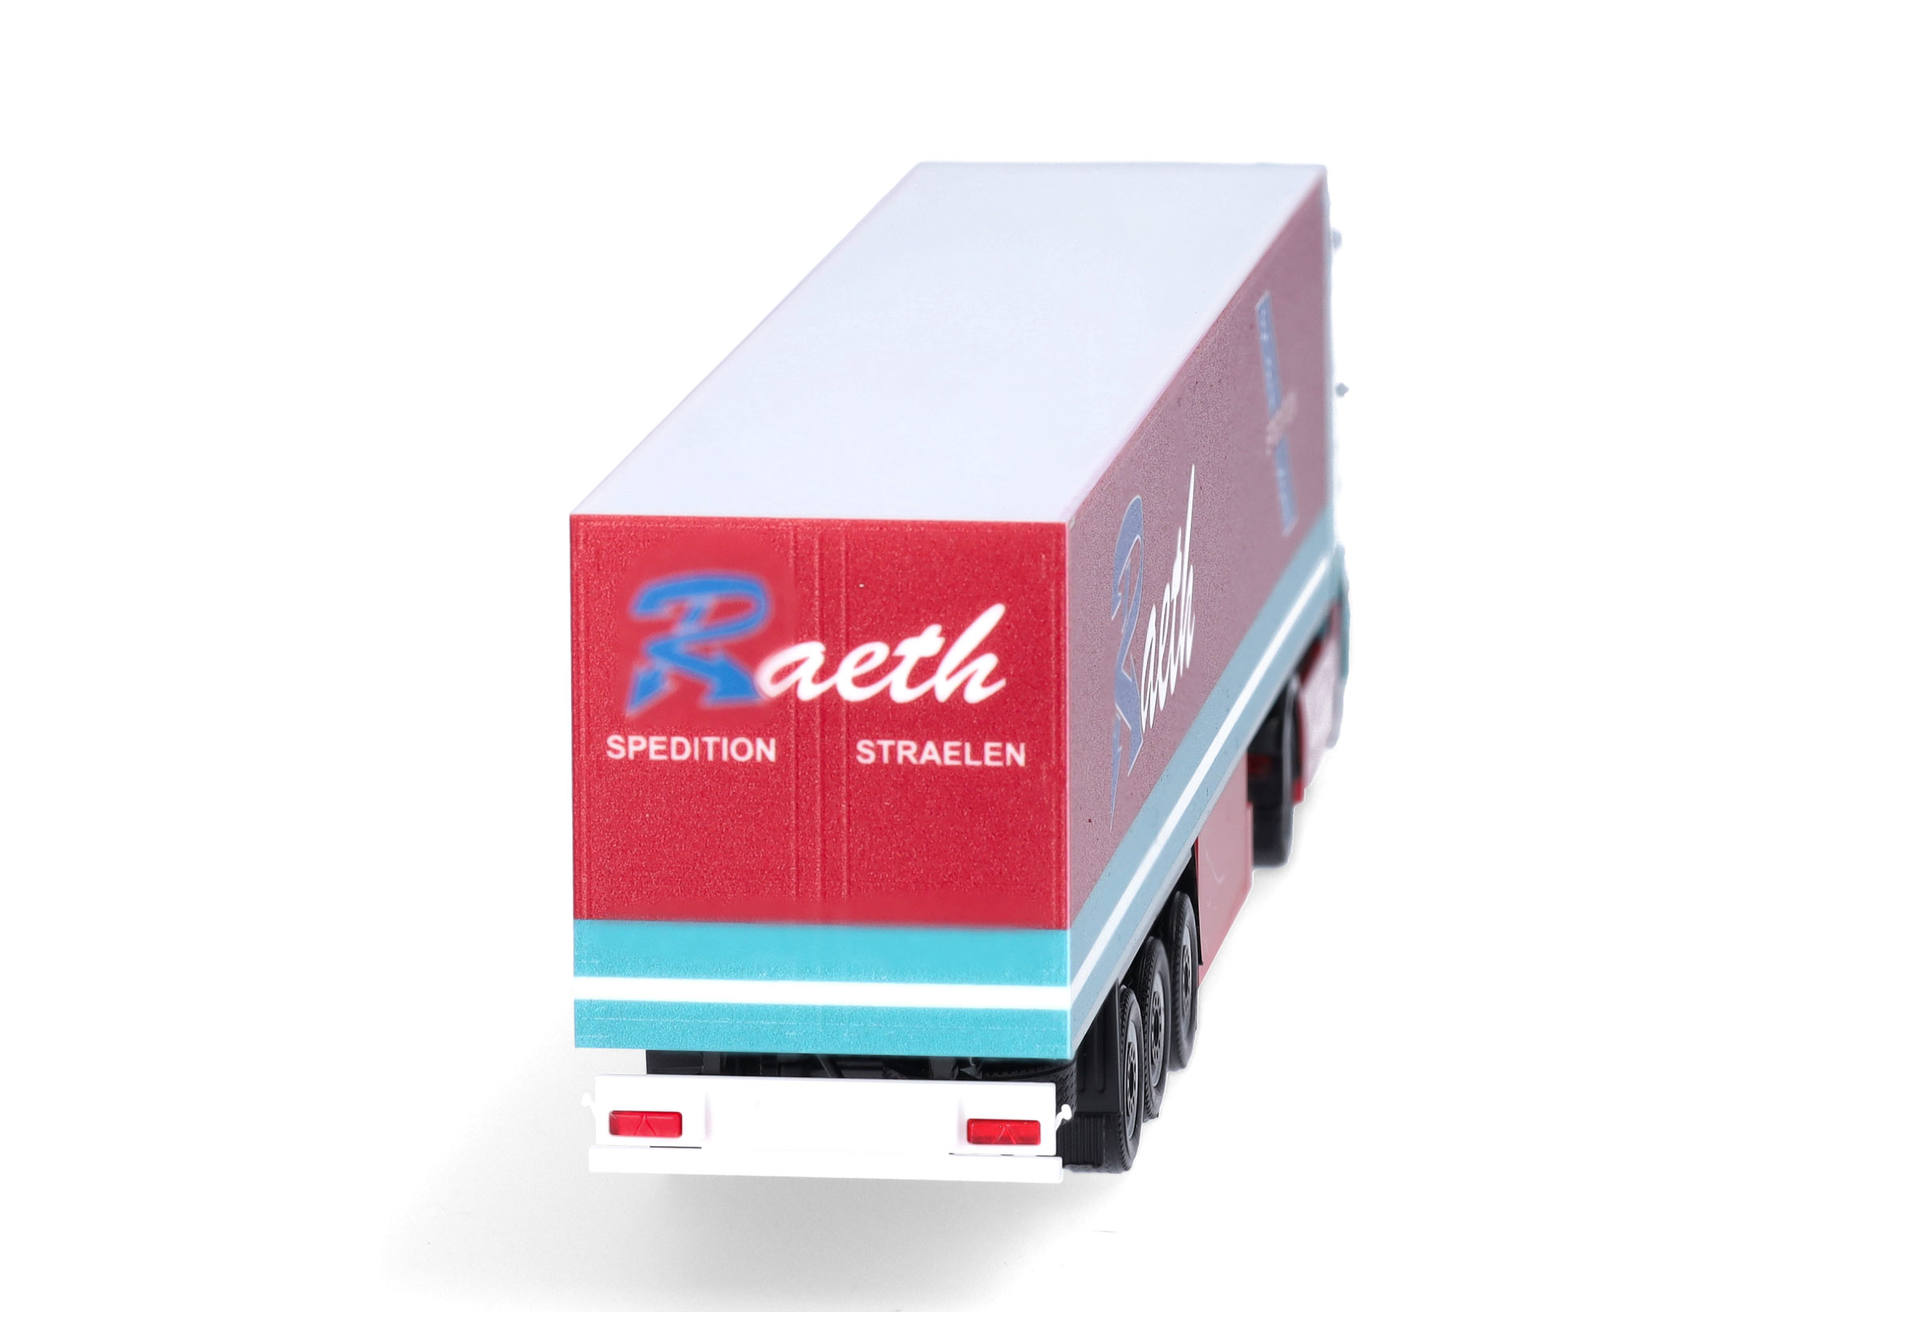 DAF XG refrigerated box semitrailer "Raeth" (Nordrhein-Westfalen/Straelen)